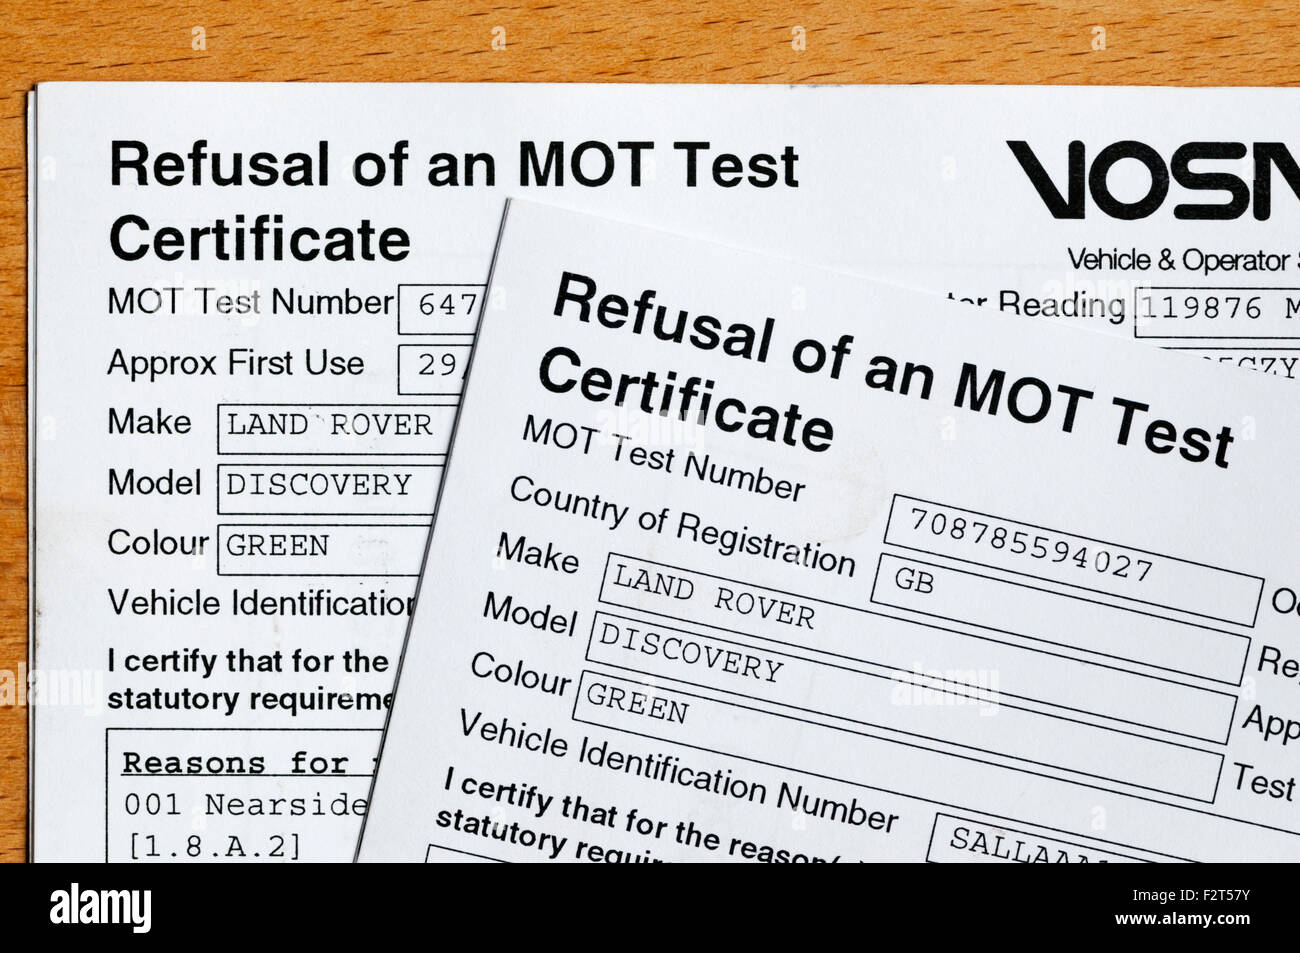 Refusal of an MOT Test Certificate. Stock Photo